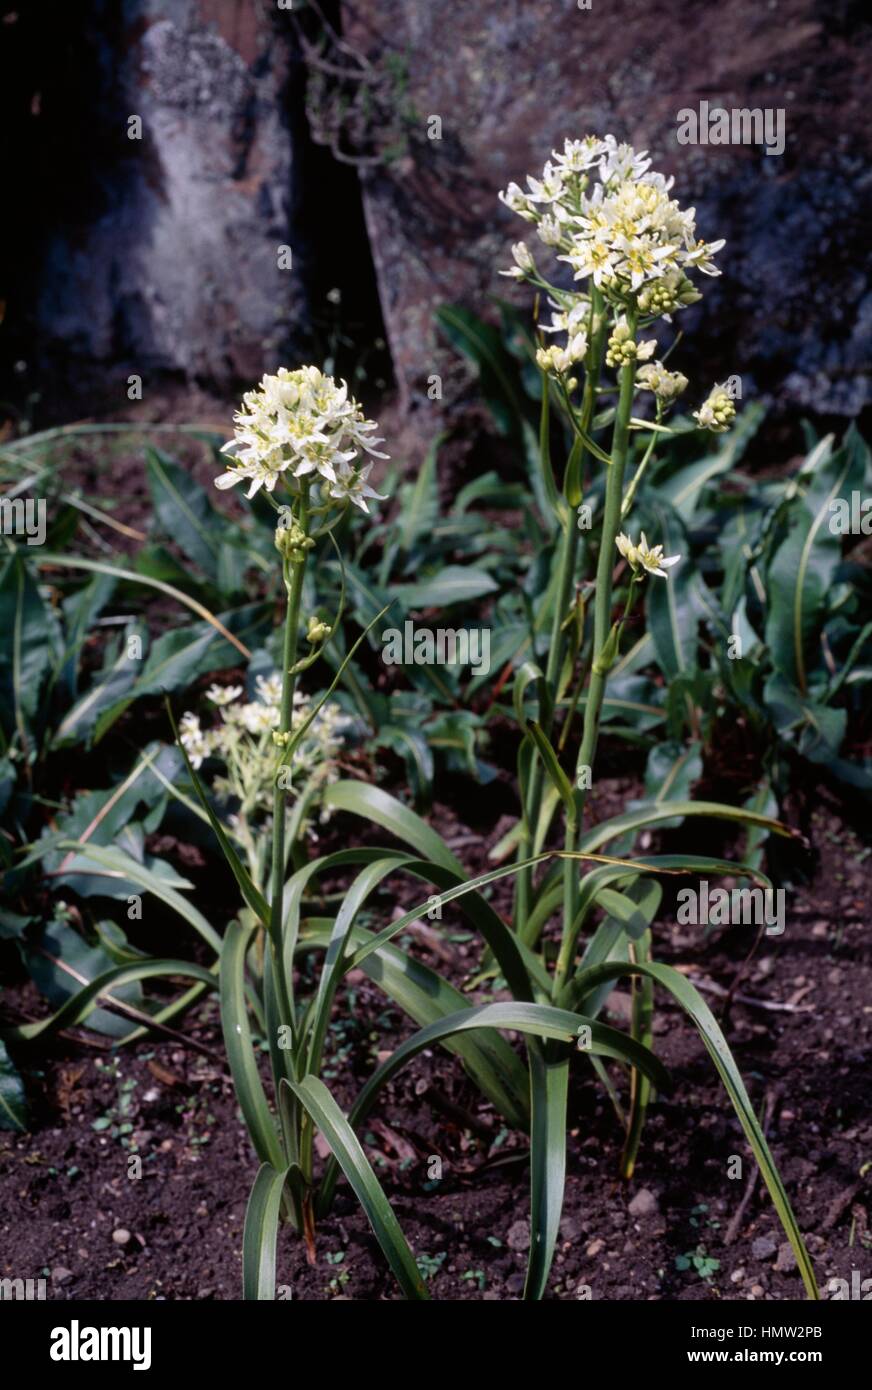 Common Star Lily (Zigadenus fremontii or Toxicoscordion fremontii), Liliaceae. Stock Photo